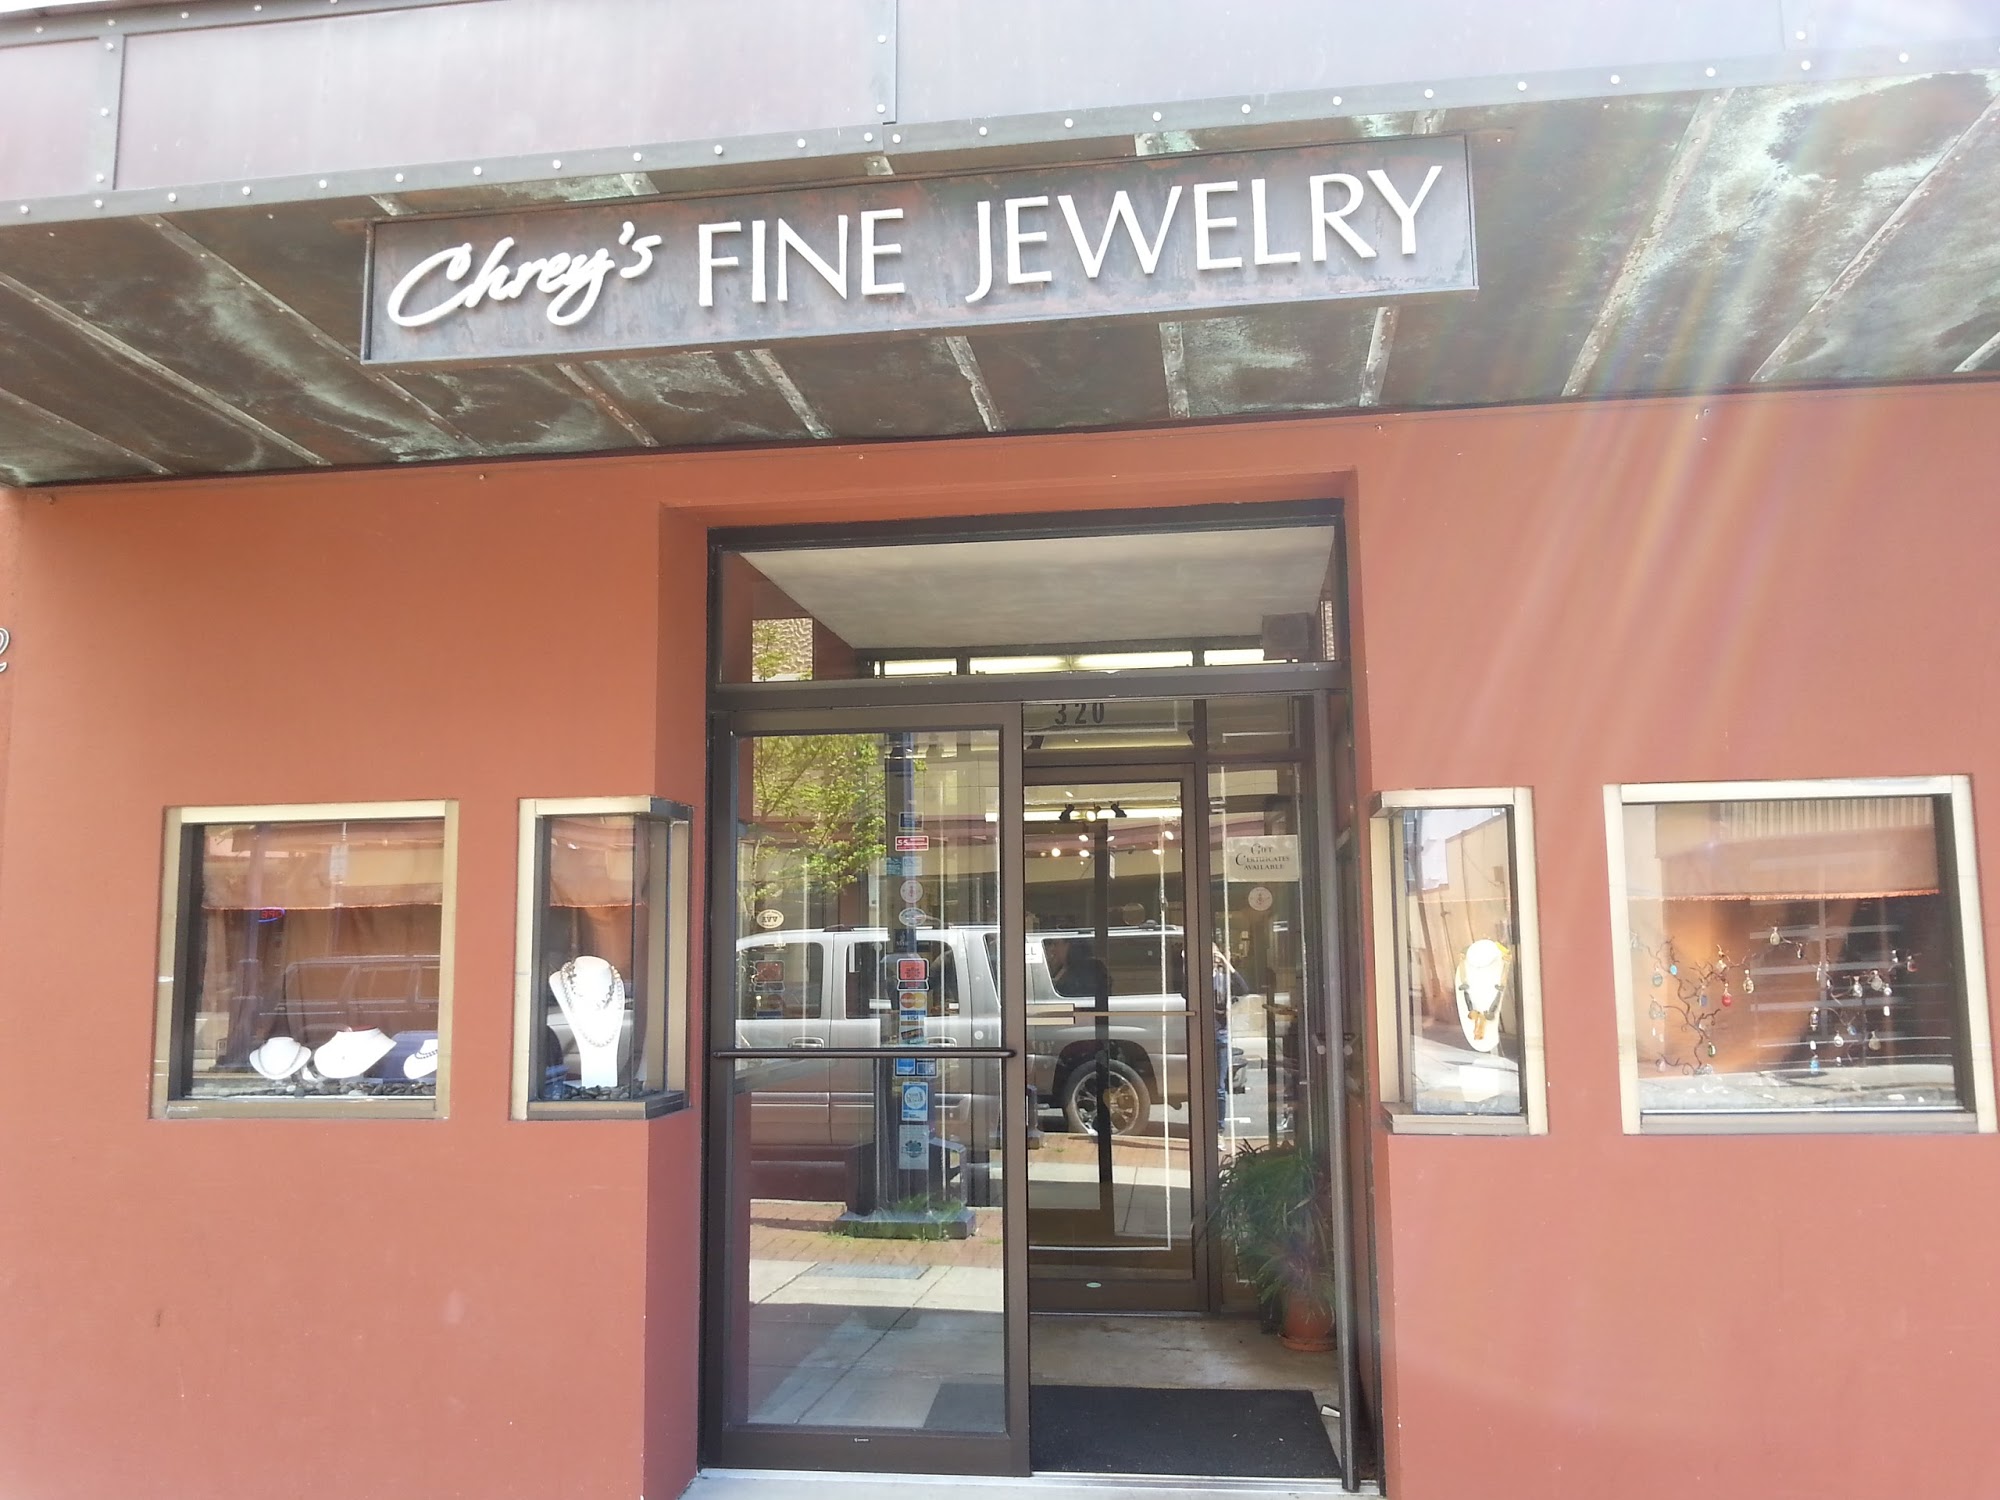 Chrey's Fine Jewelry